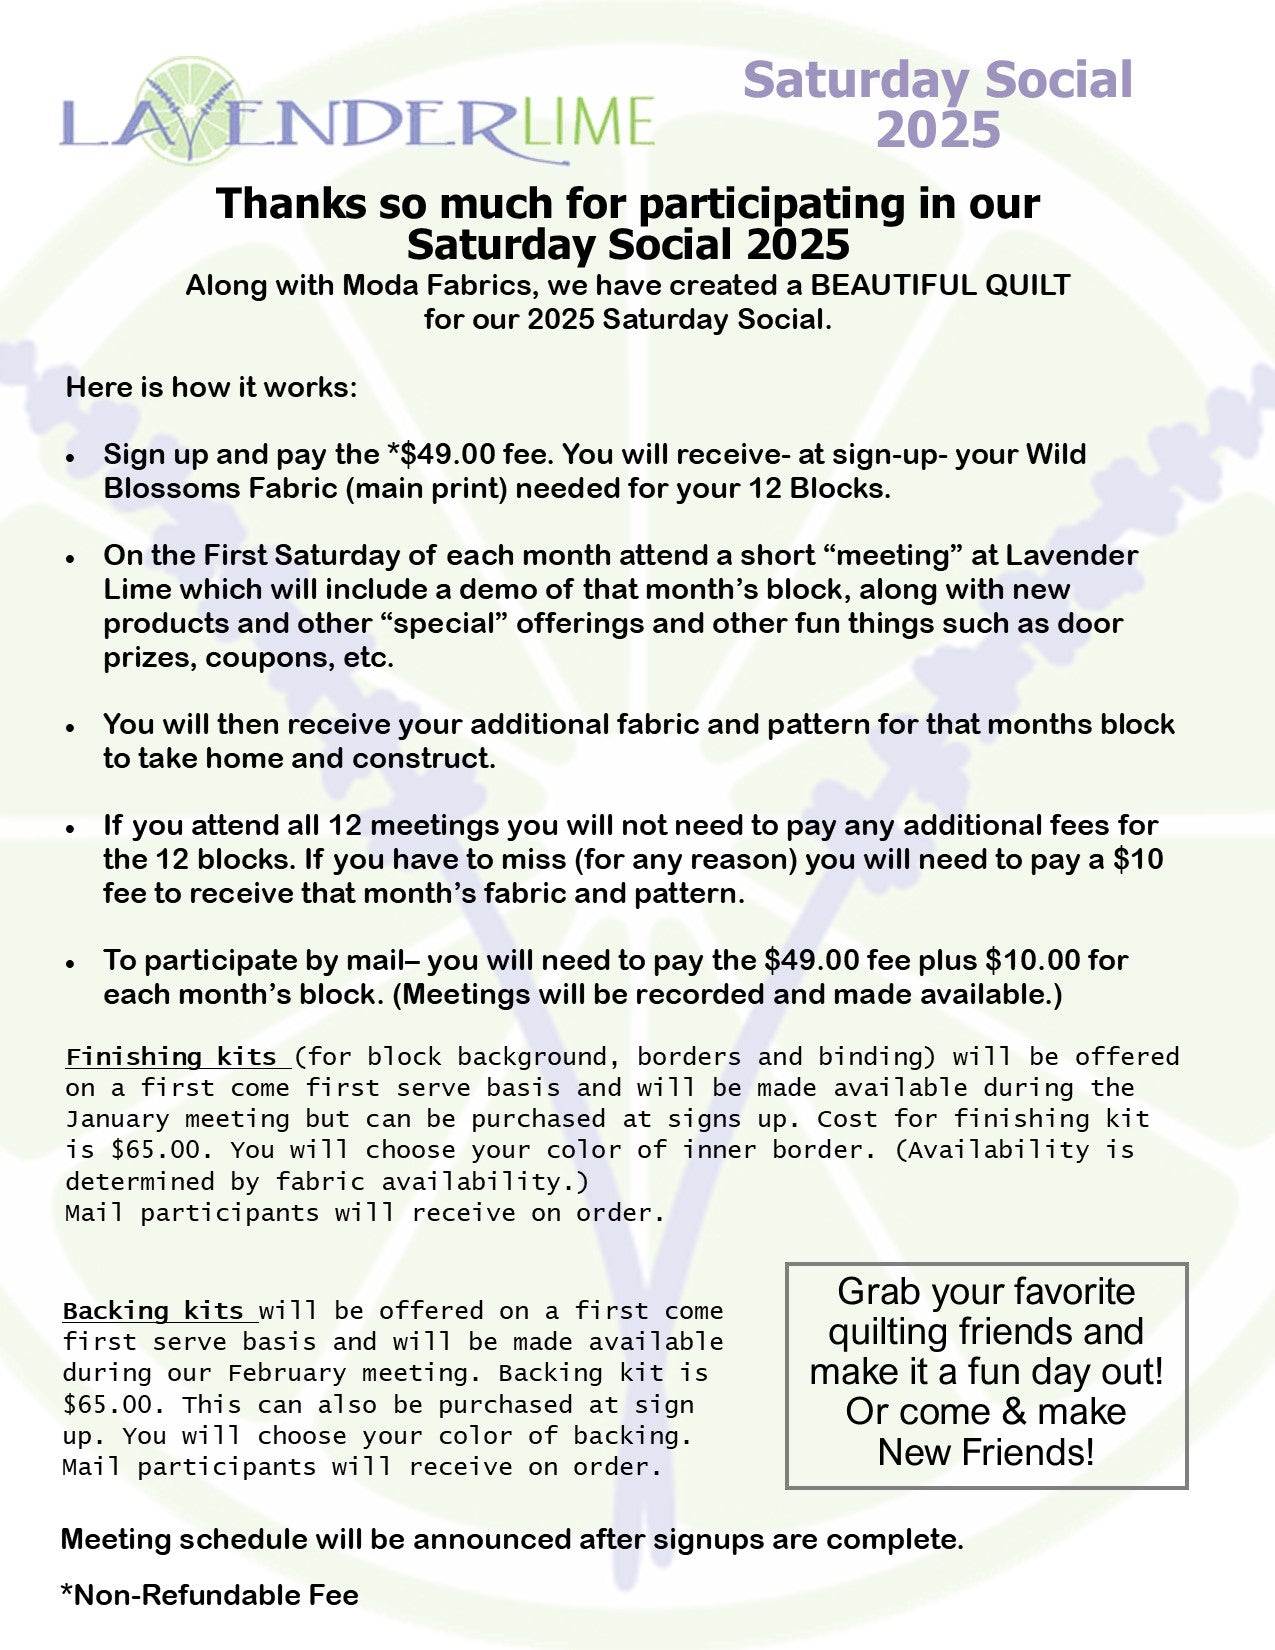 Saturday Social Club 2025